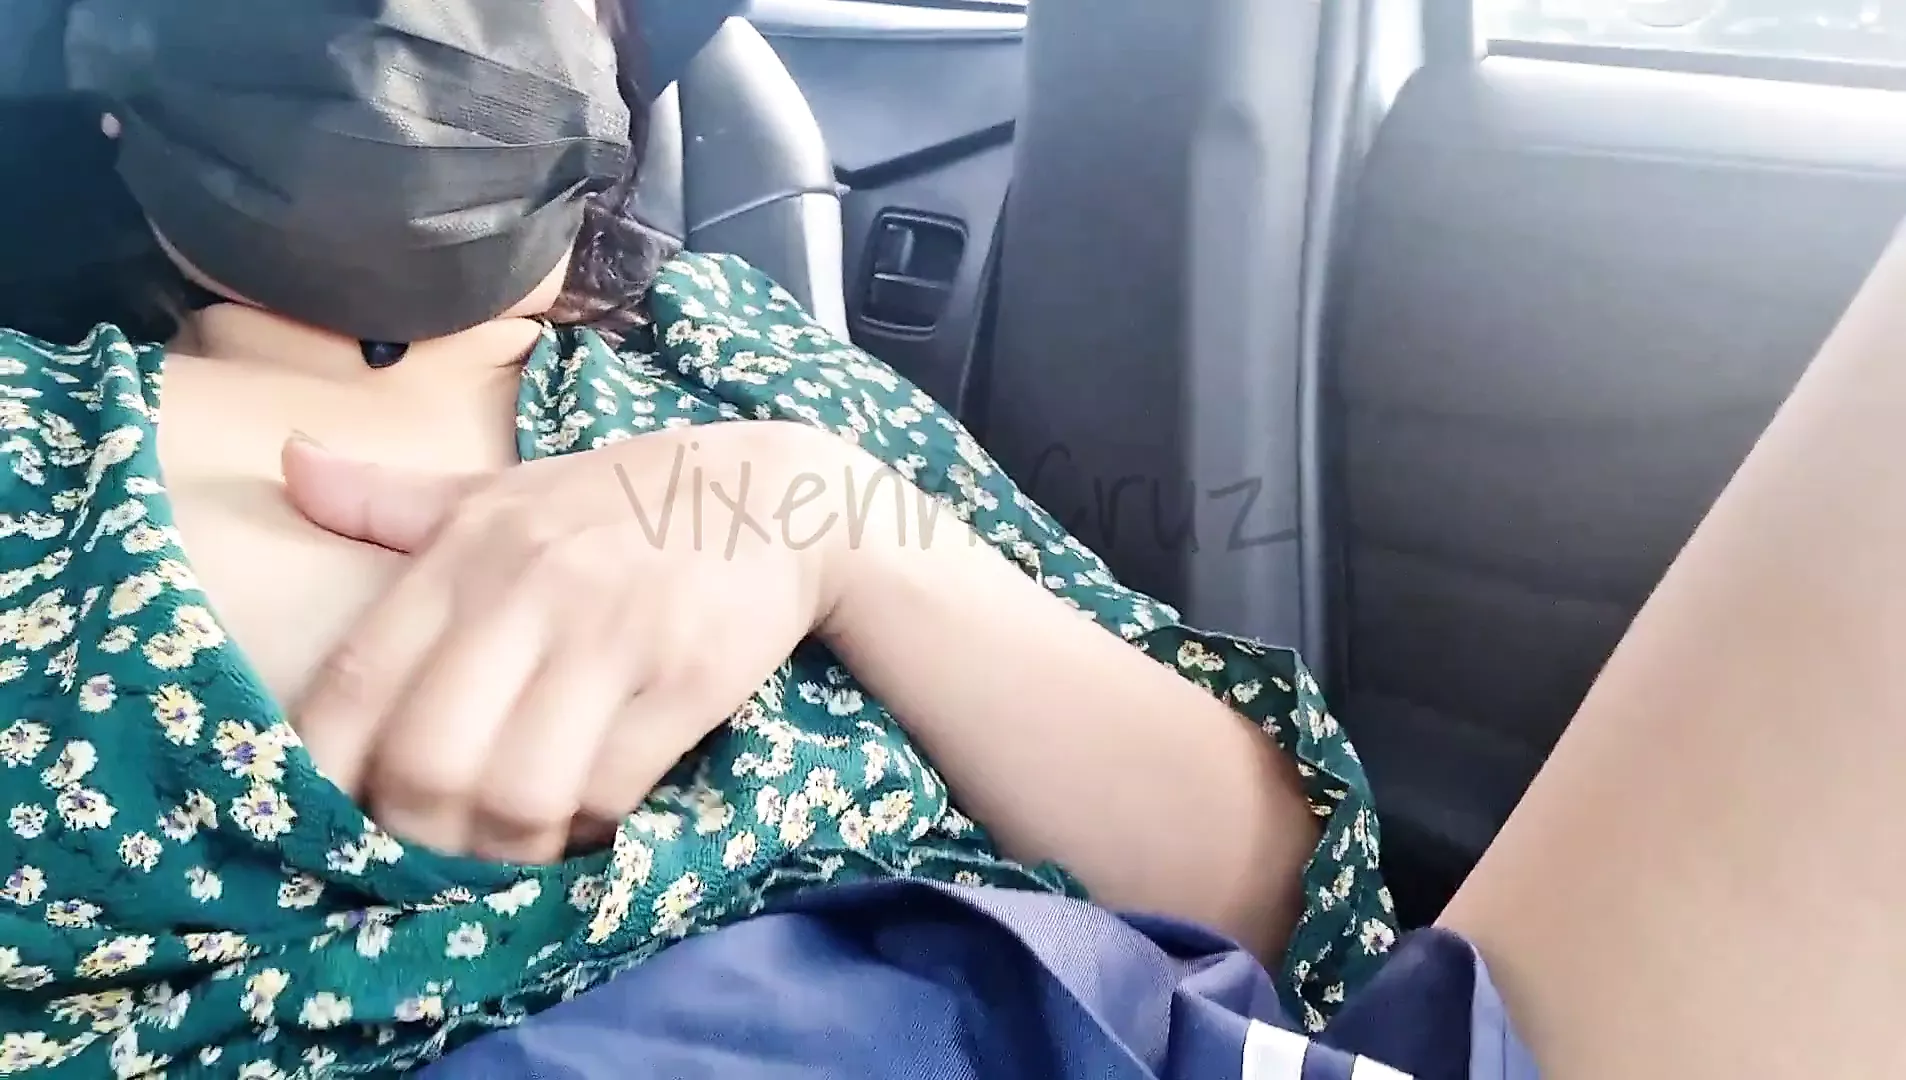 Public Fingering Inside the Car – Boyfriend’s Request – Wet Pussy